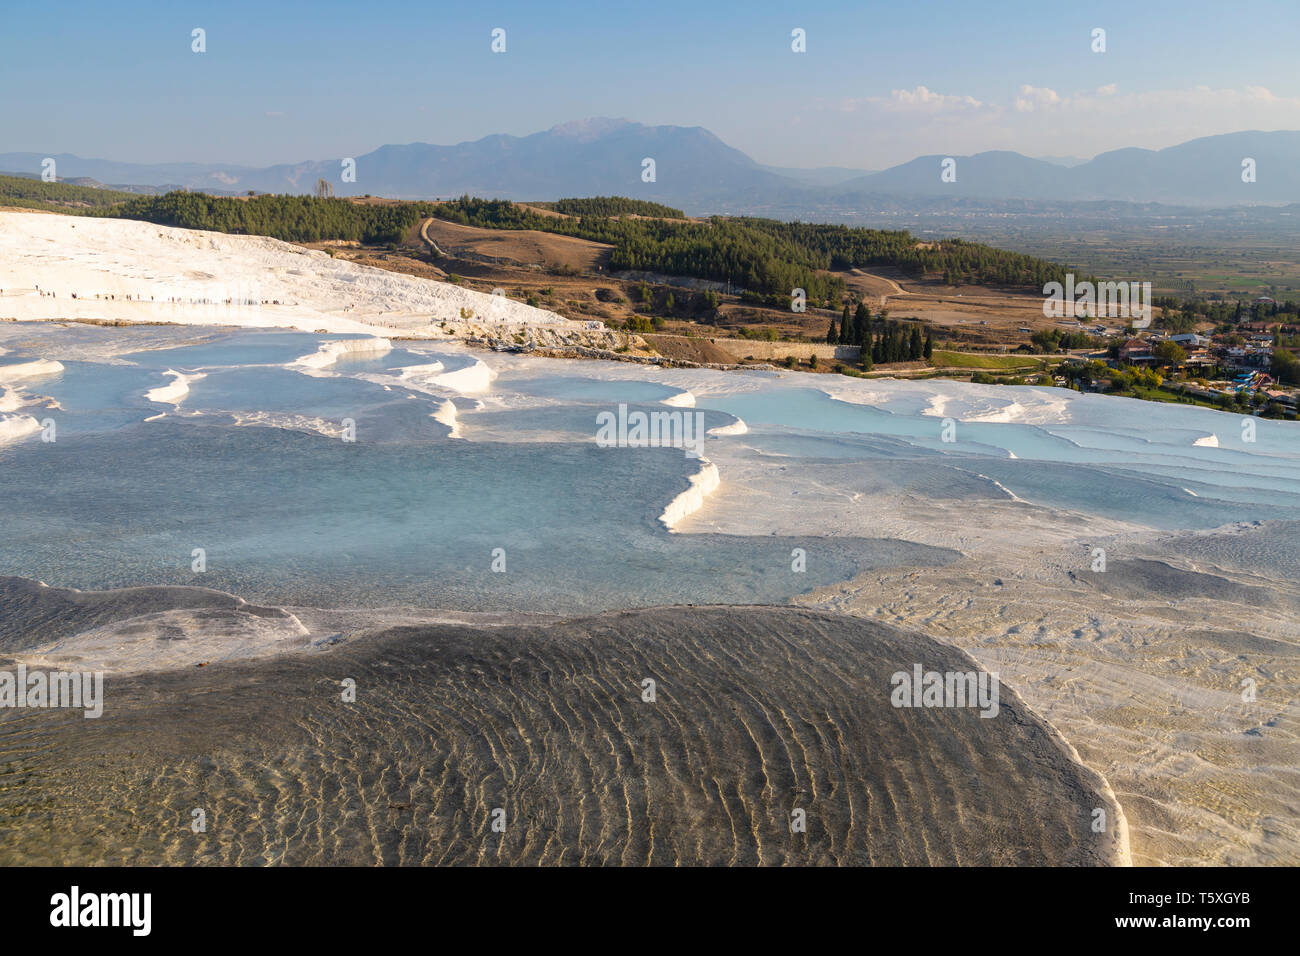 Turkey, Denizli Province, Pamukkale, Hierapolis Pamukkale Archeological Site (UNESCO Site), Natural Travertine Thermal Pools Stock Photo